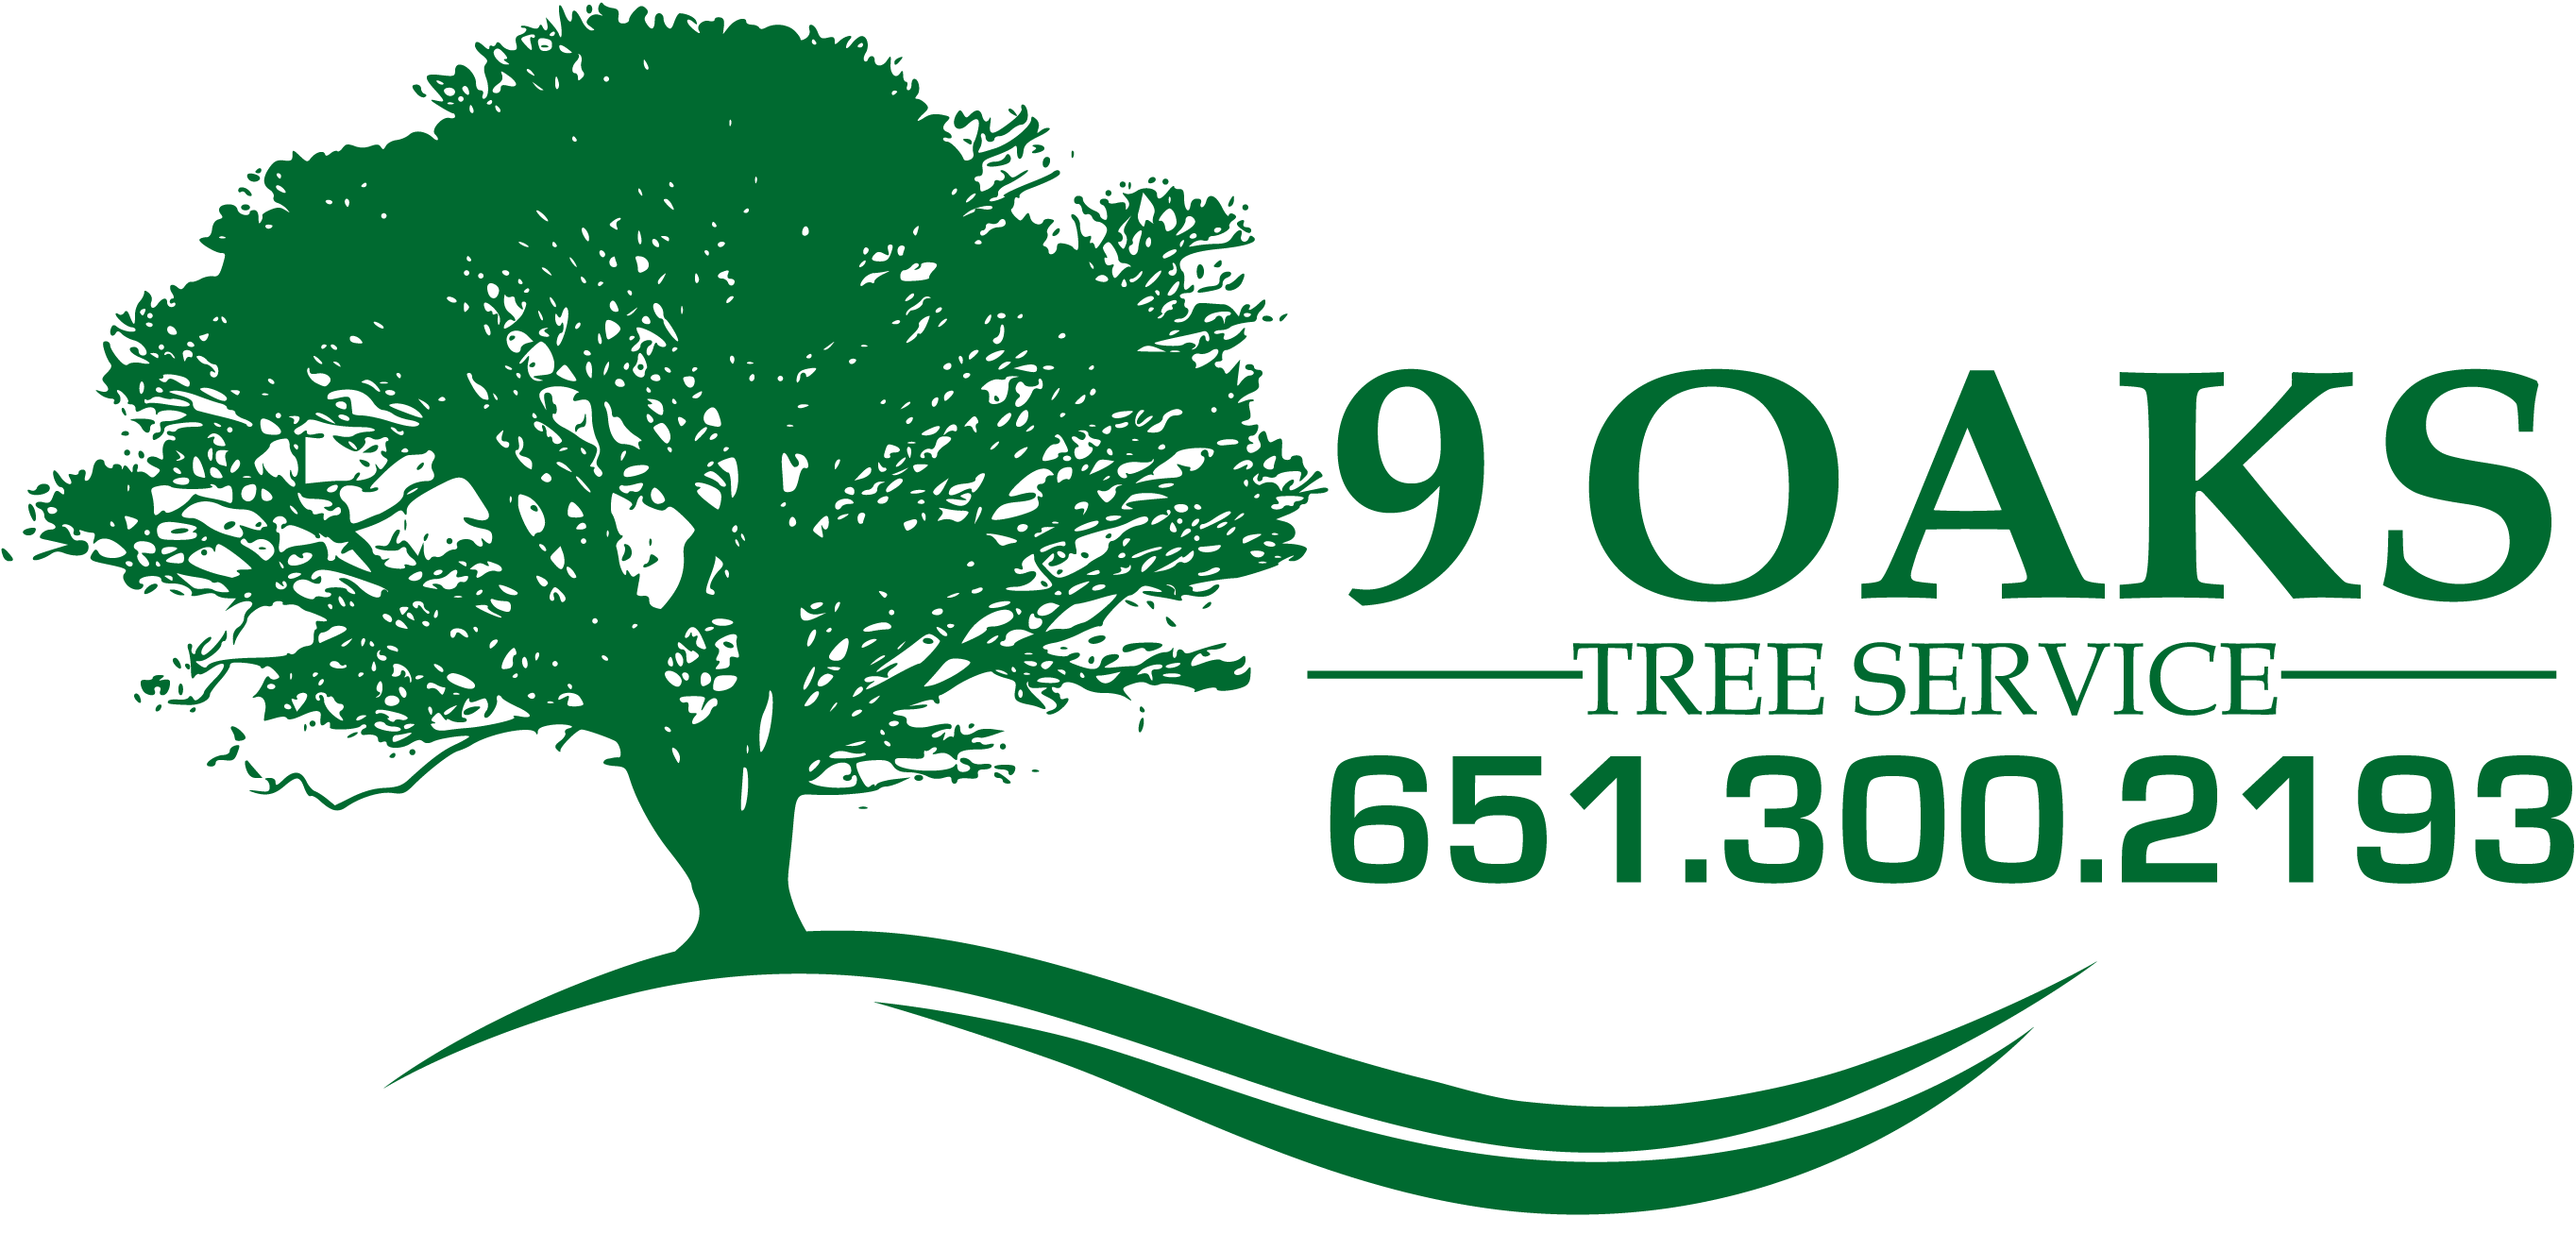 Tree Service Logo - Tree Removal Woodbury | Tree Service St. Paul